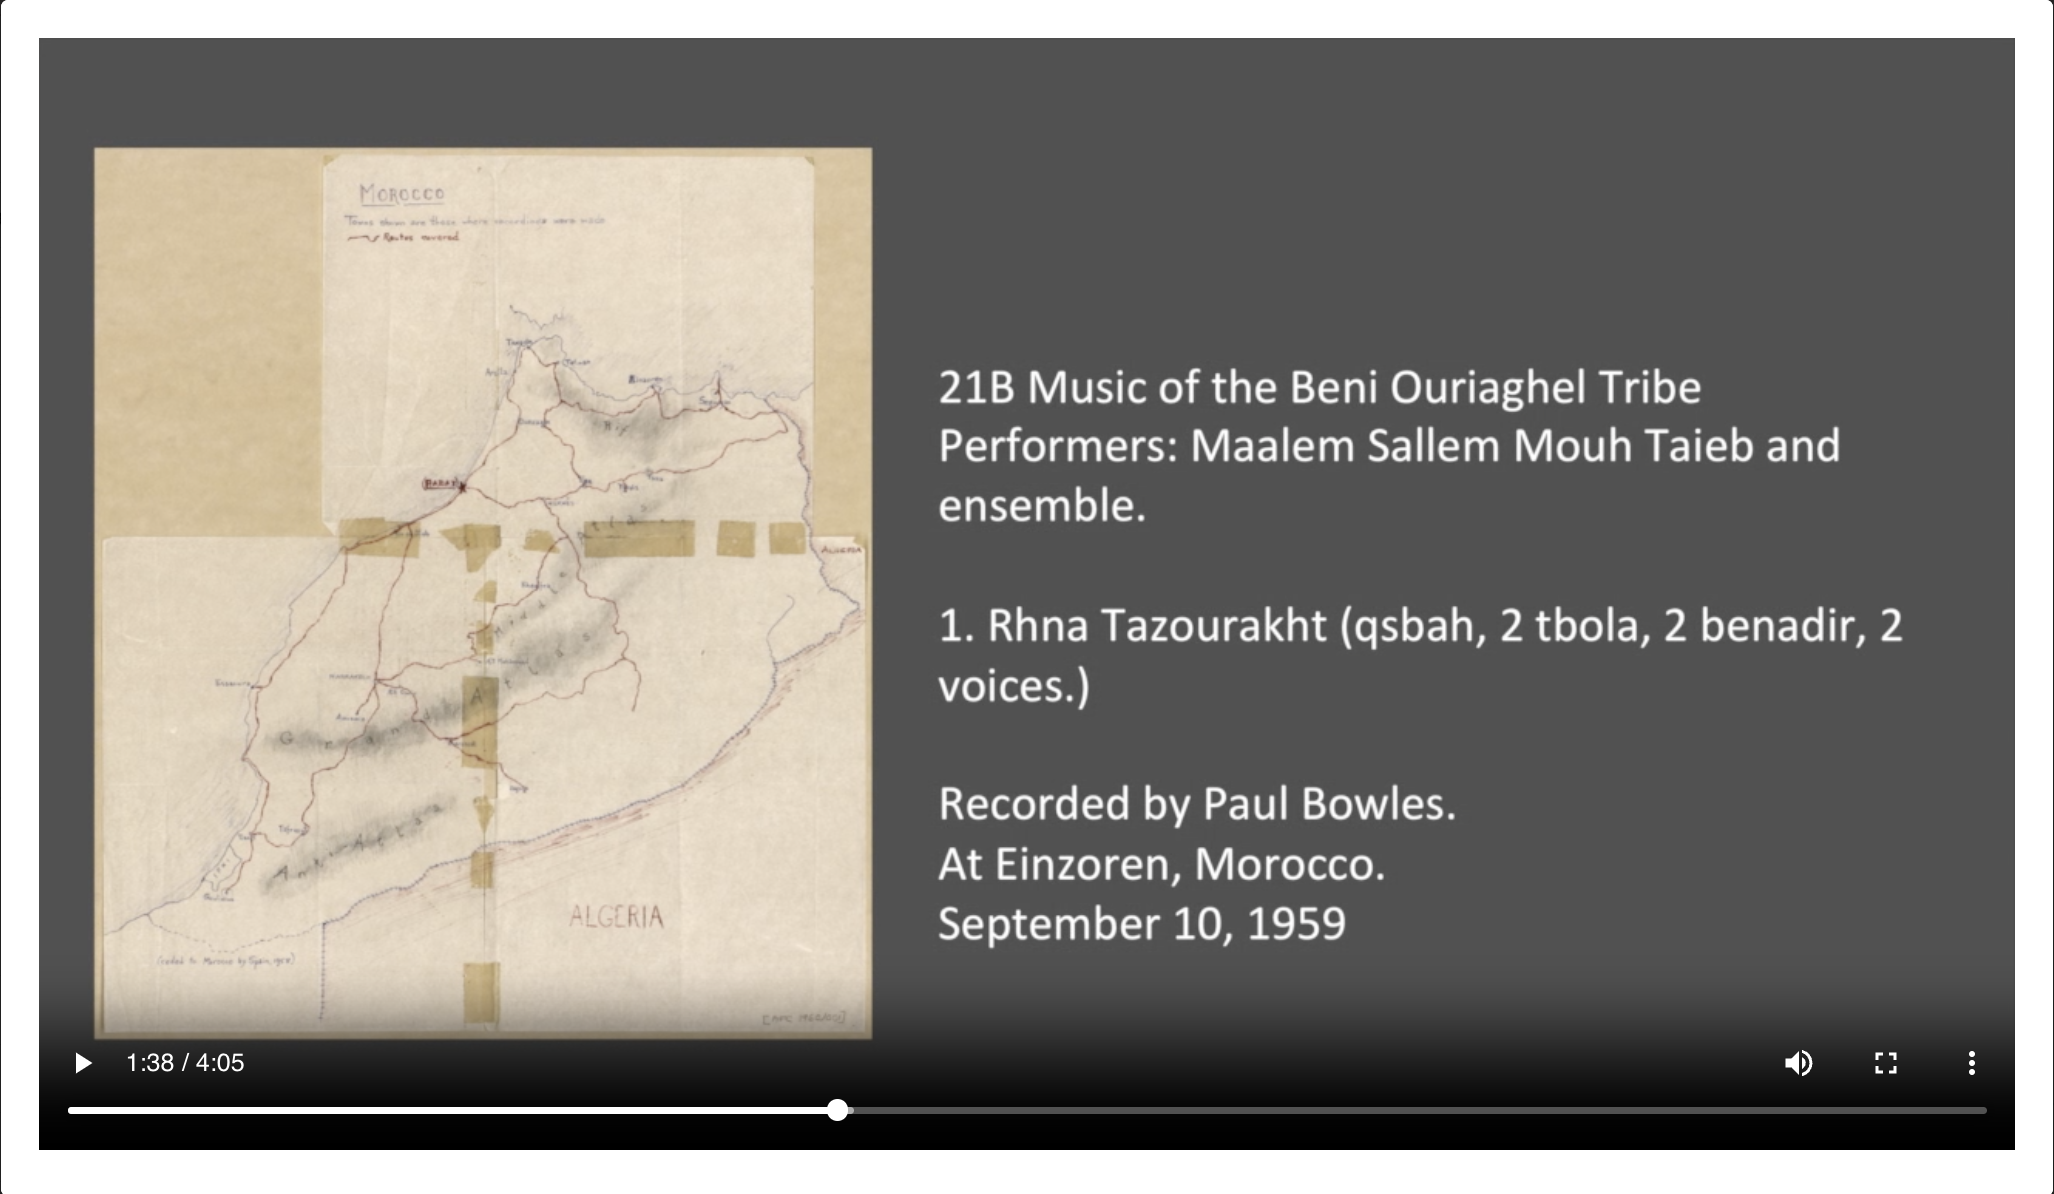 <p>21B-2 Rhana Tazourakht (qsbah, bendir) Performers: Maalem Sallem Mouh Taieb and ensemble. Recorded by Paul Bowles. At Einzoren, Morocco. September 10, 1959</p>